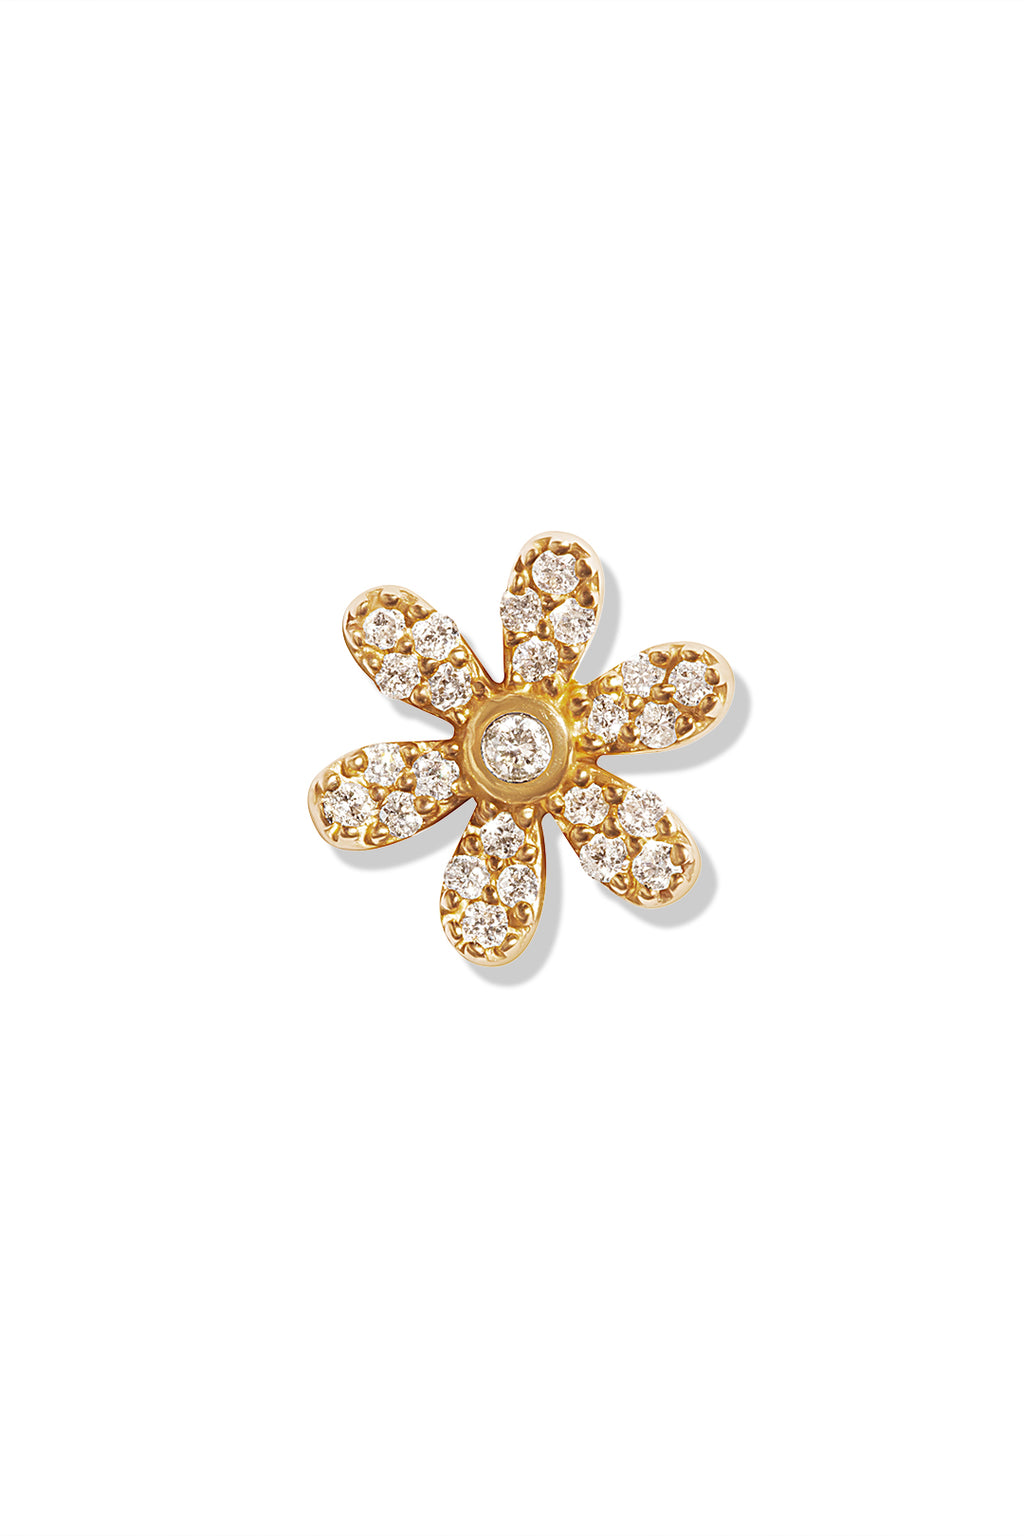 A 14k gold stud earring shaped like a daisy, encrusted with diamonds. 